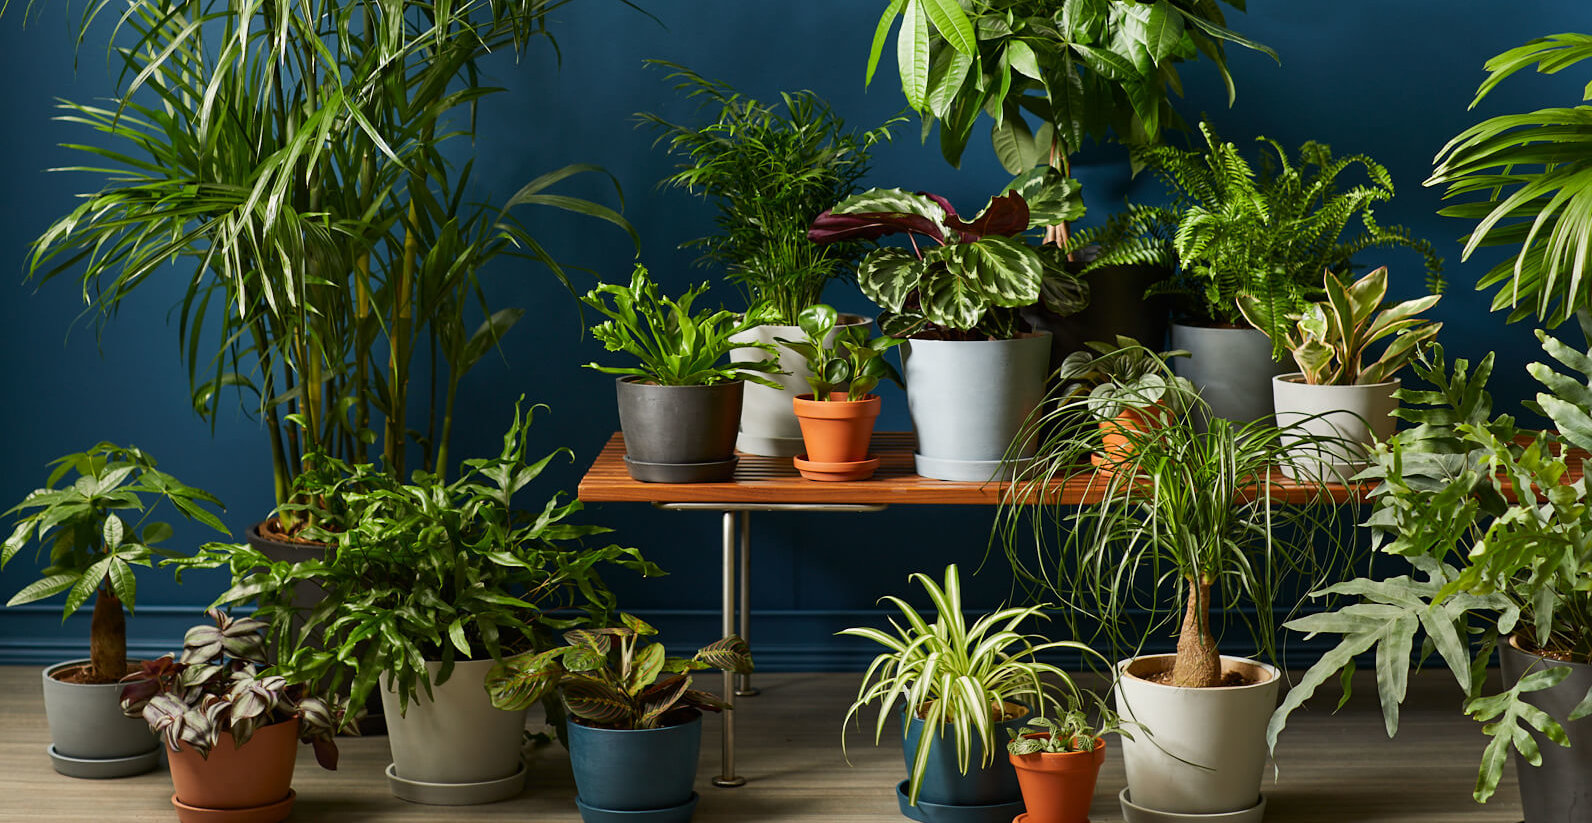  Pet Friendly Indoor Plants for Simple Design